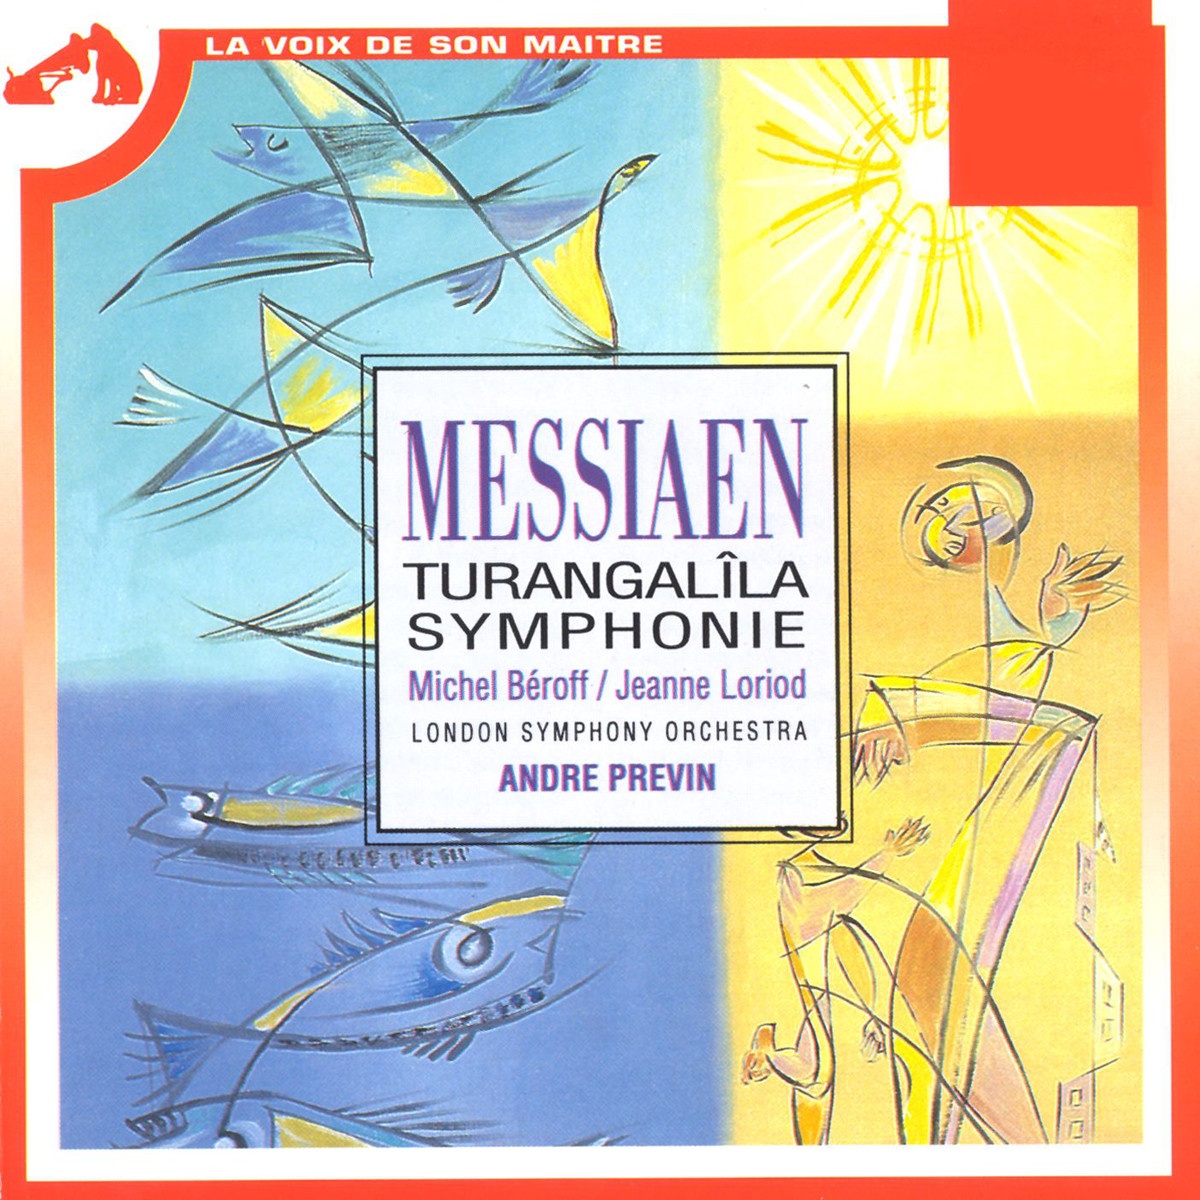 Messiaen  Turangal laSymphonie